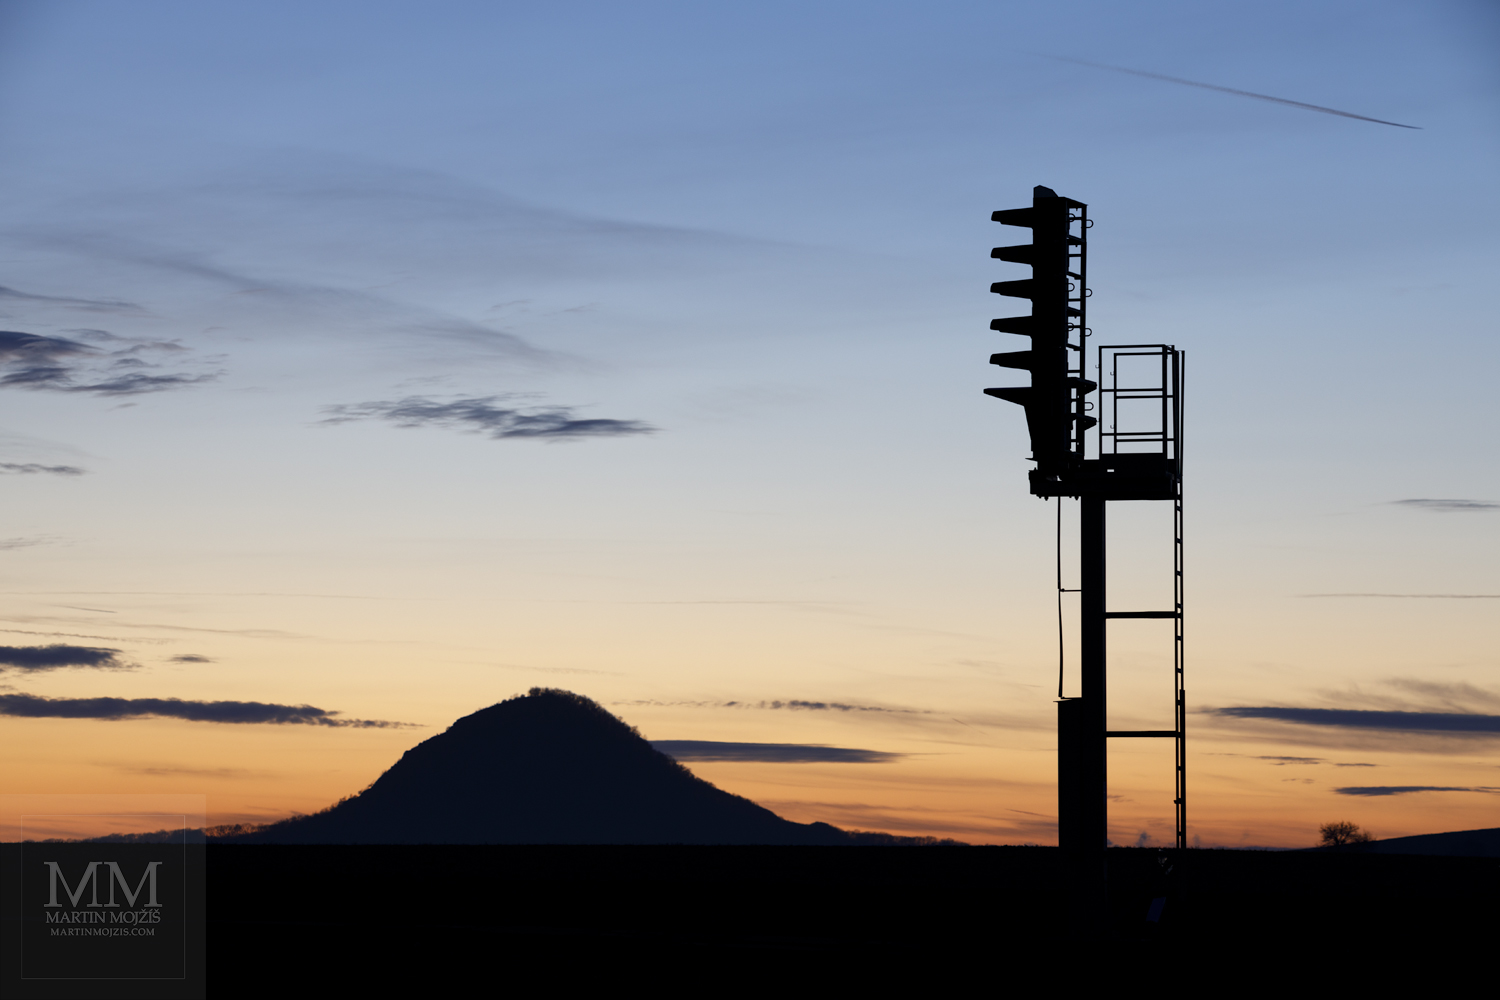 Large format fine art photograph of the vesper landscape and railway light signal appliance silhouette. Martin Mojzis.